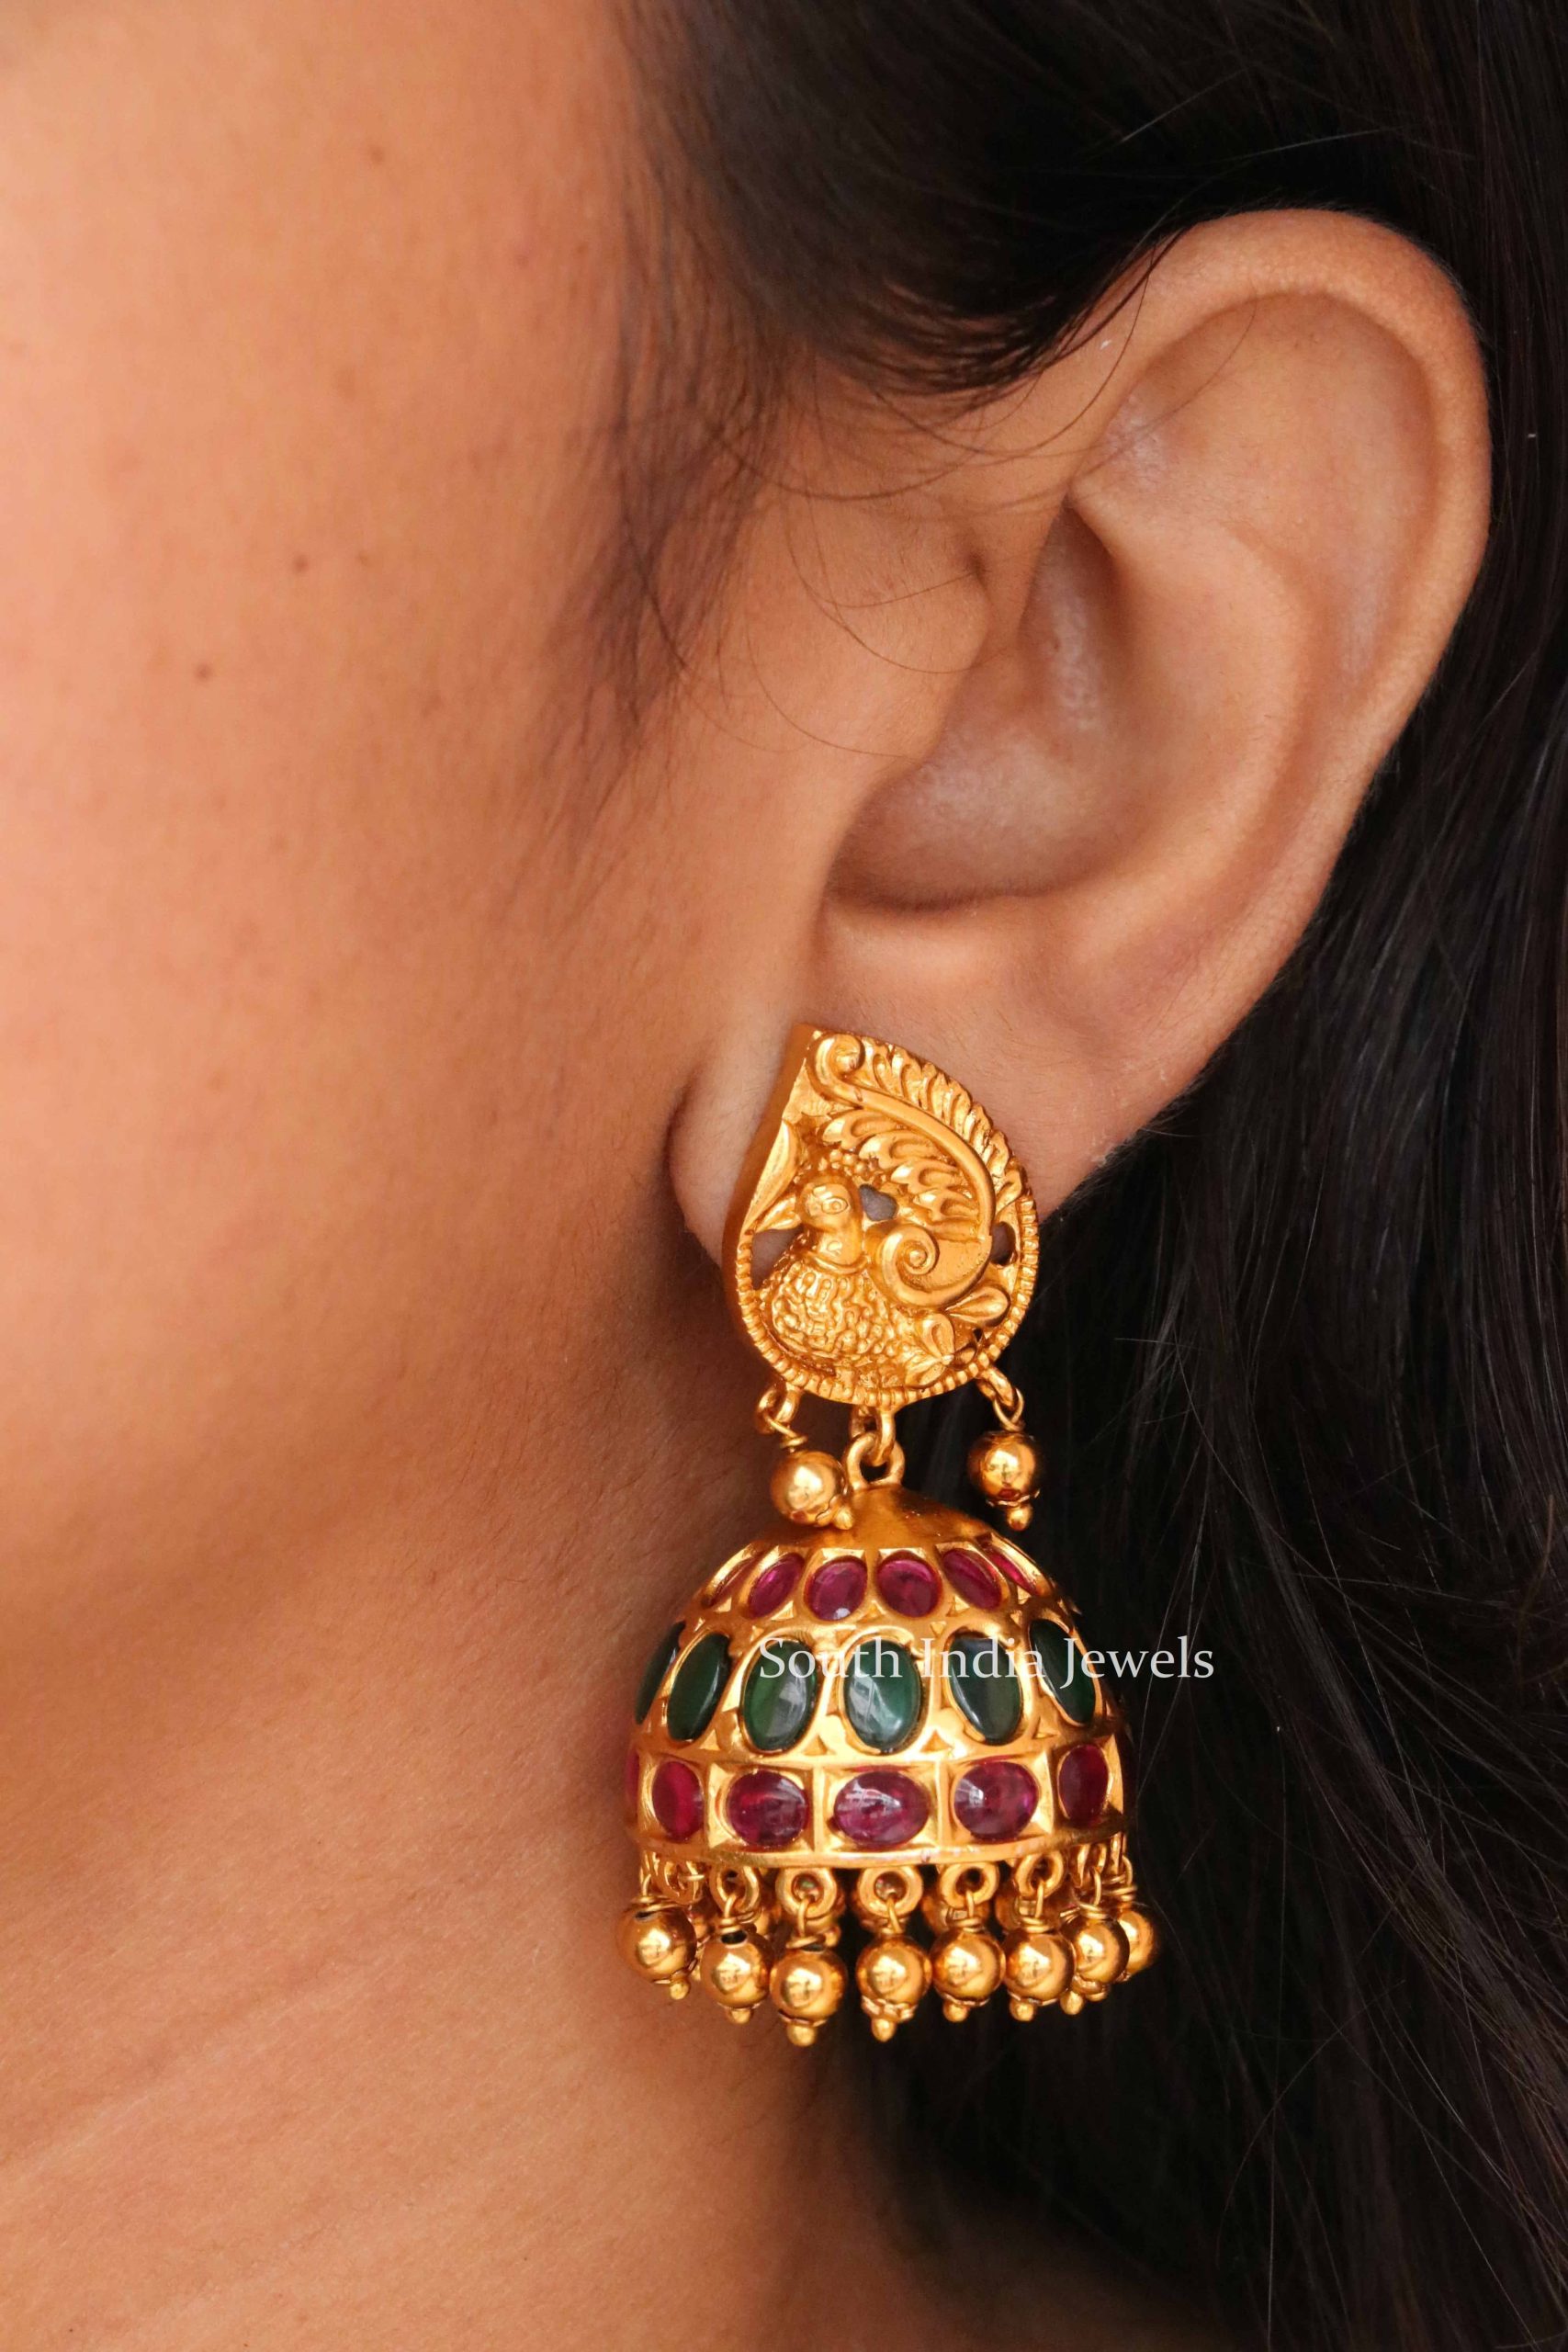 Kemp Peacock Design Jhumkas - South India Jewels